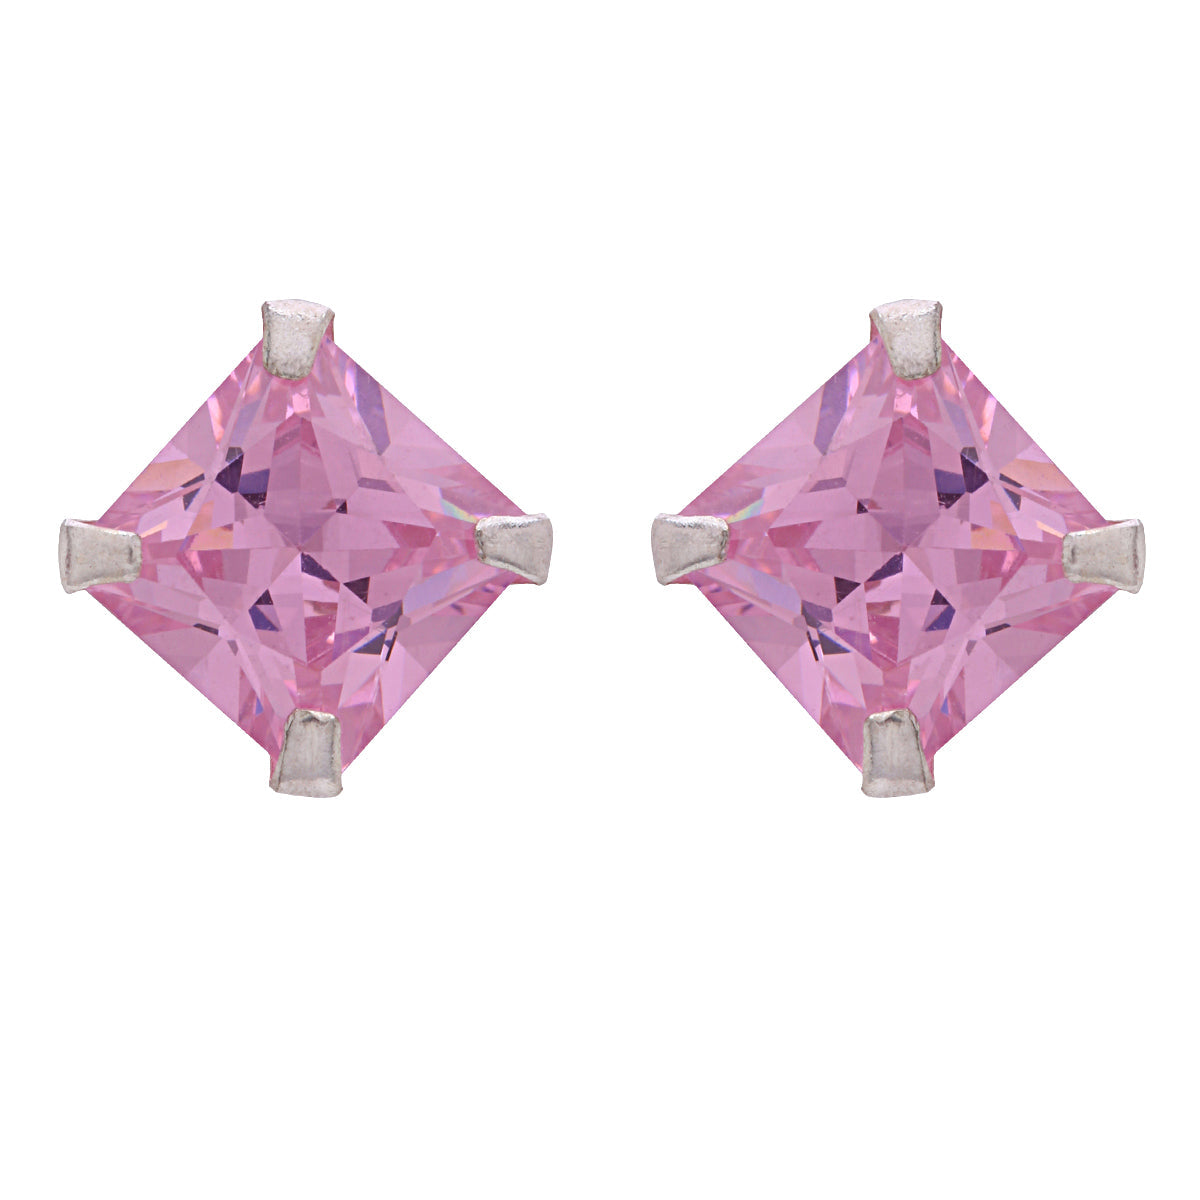 Silver Kunzite Pink Square Stud Earrings